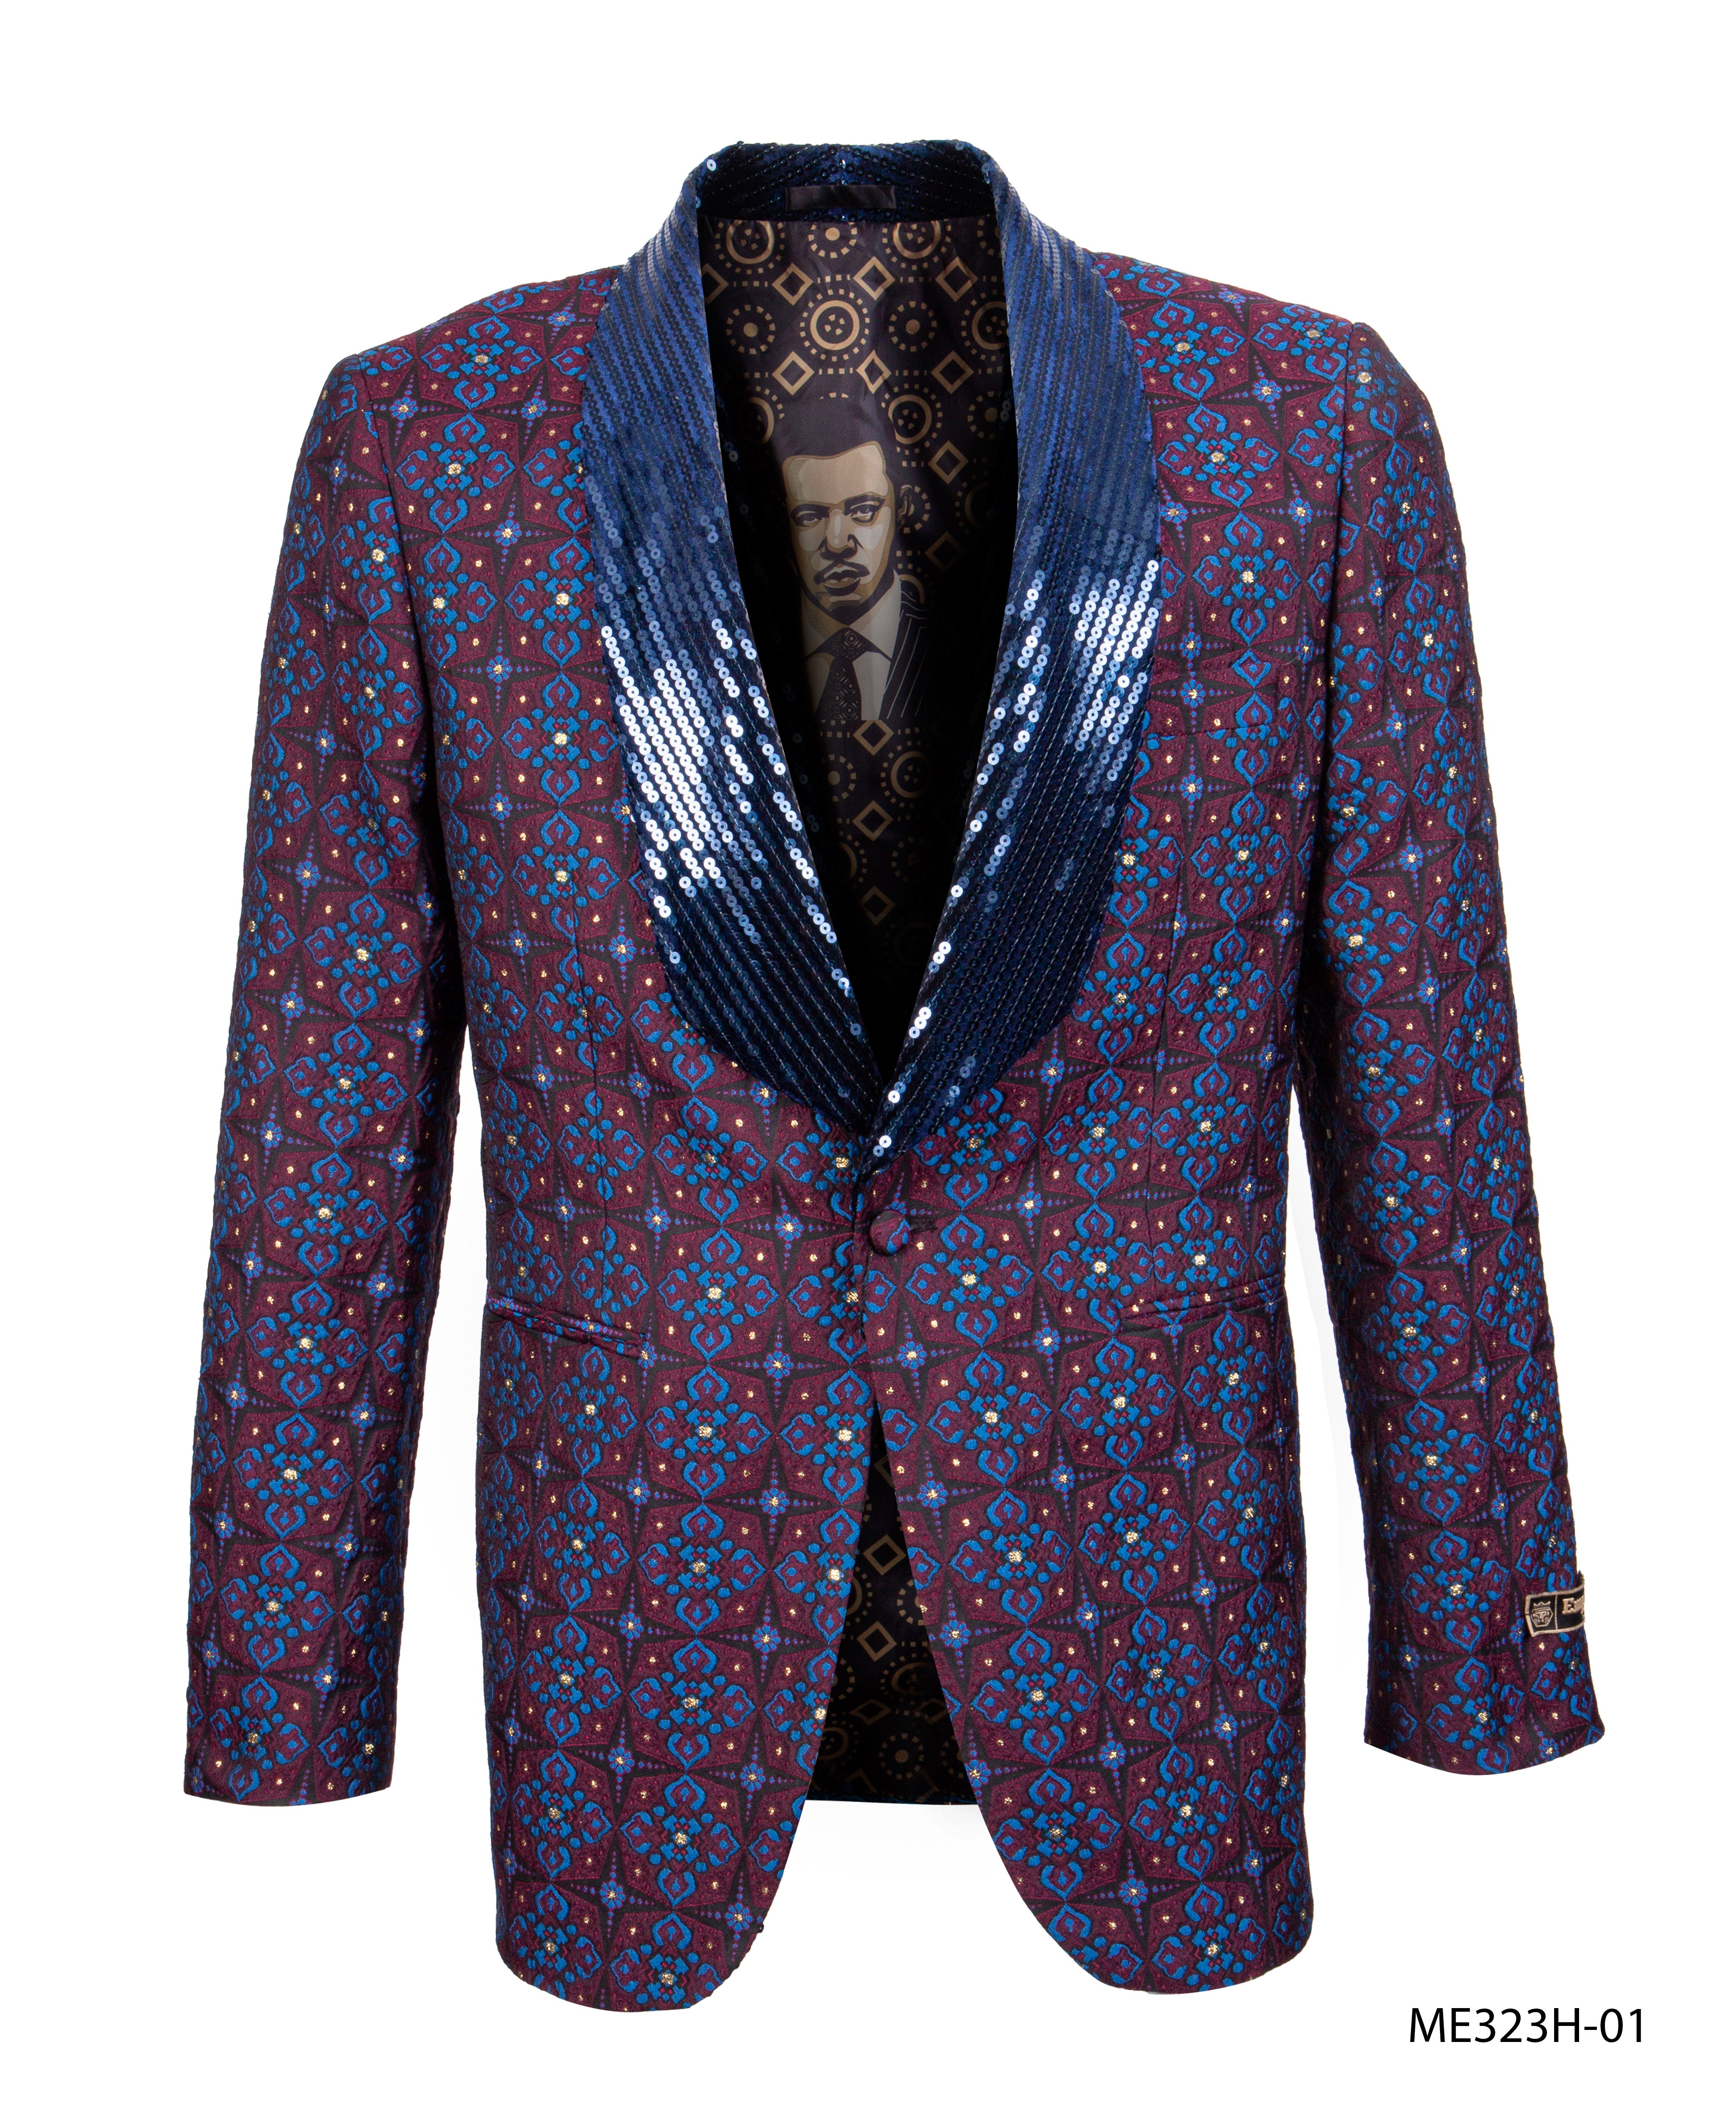 Burgundy/Blue Empire Show Blazers Formal Dinner Suit Jackets For Men ME323H-01